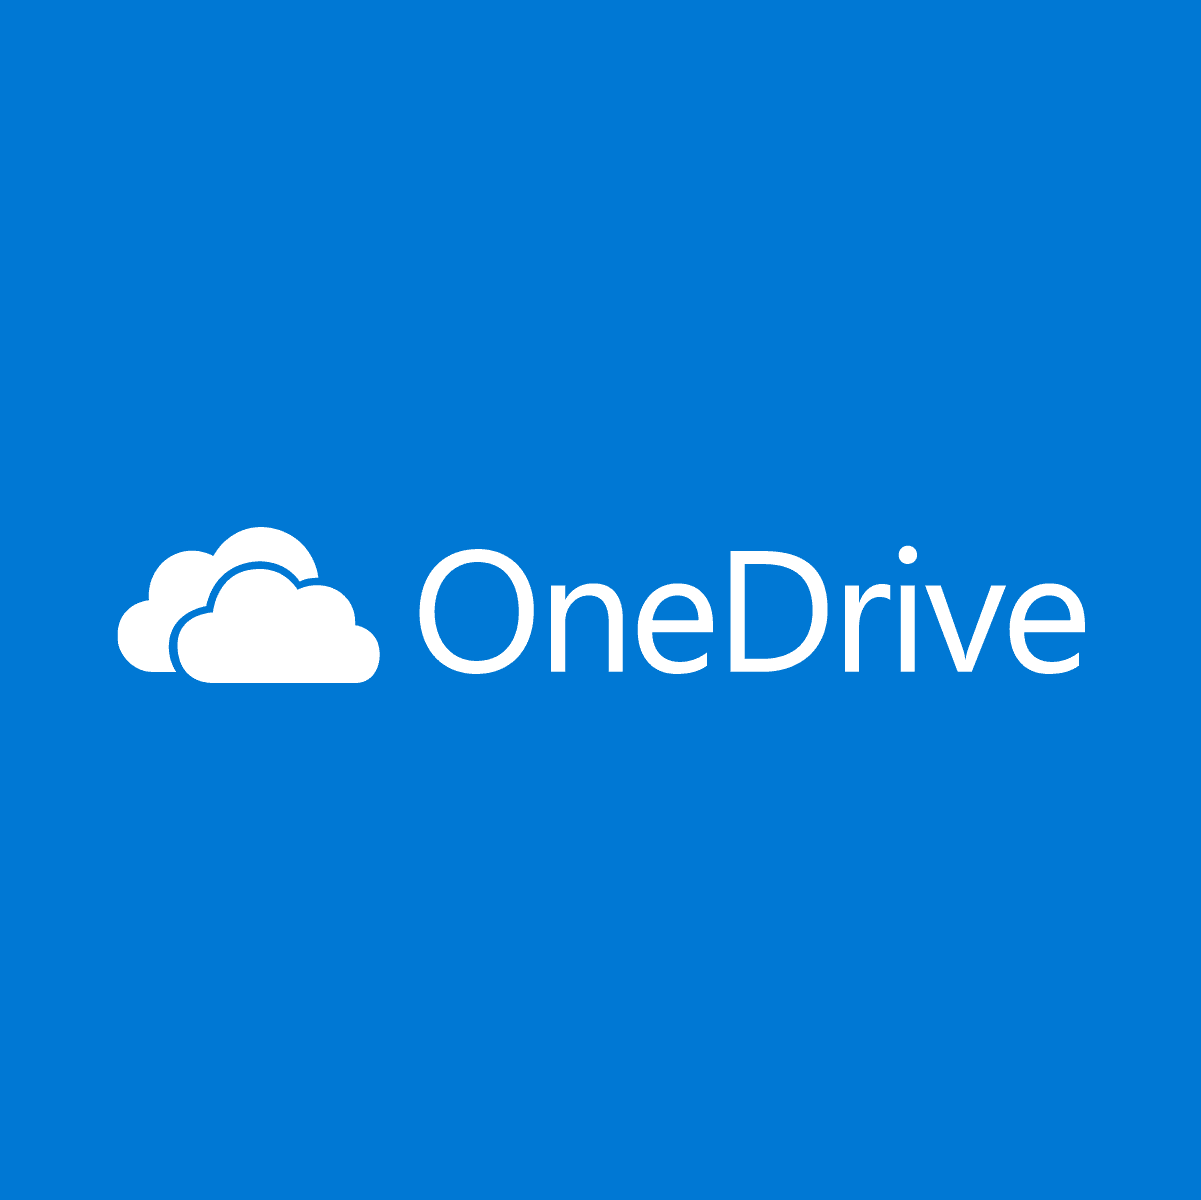 onedrive.live.com